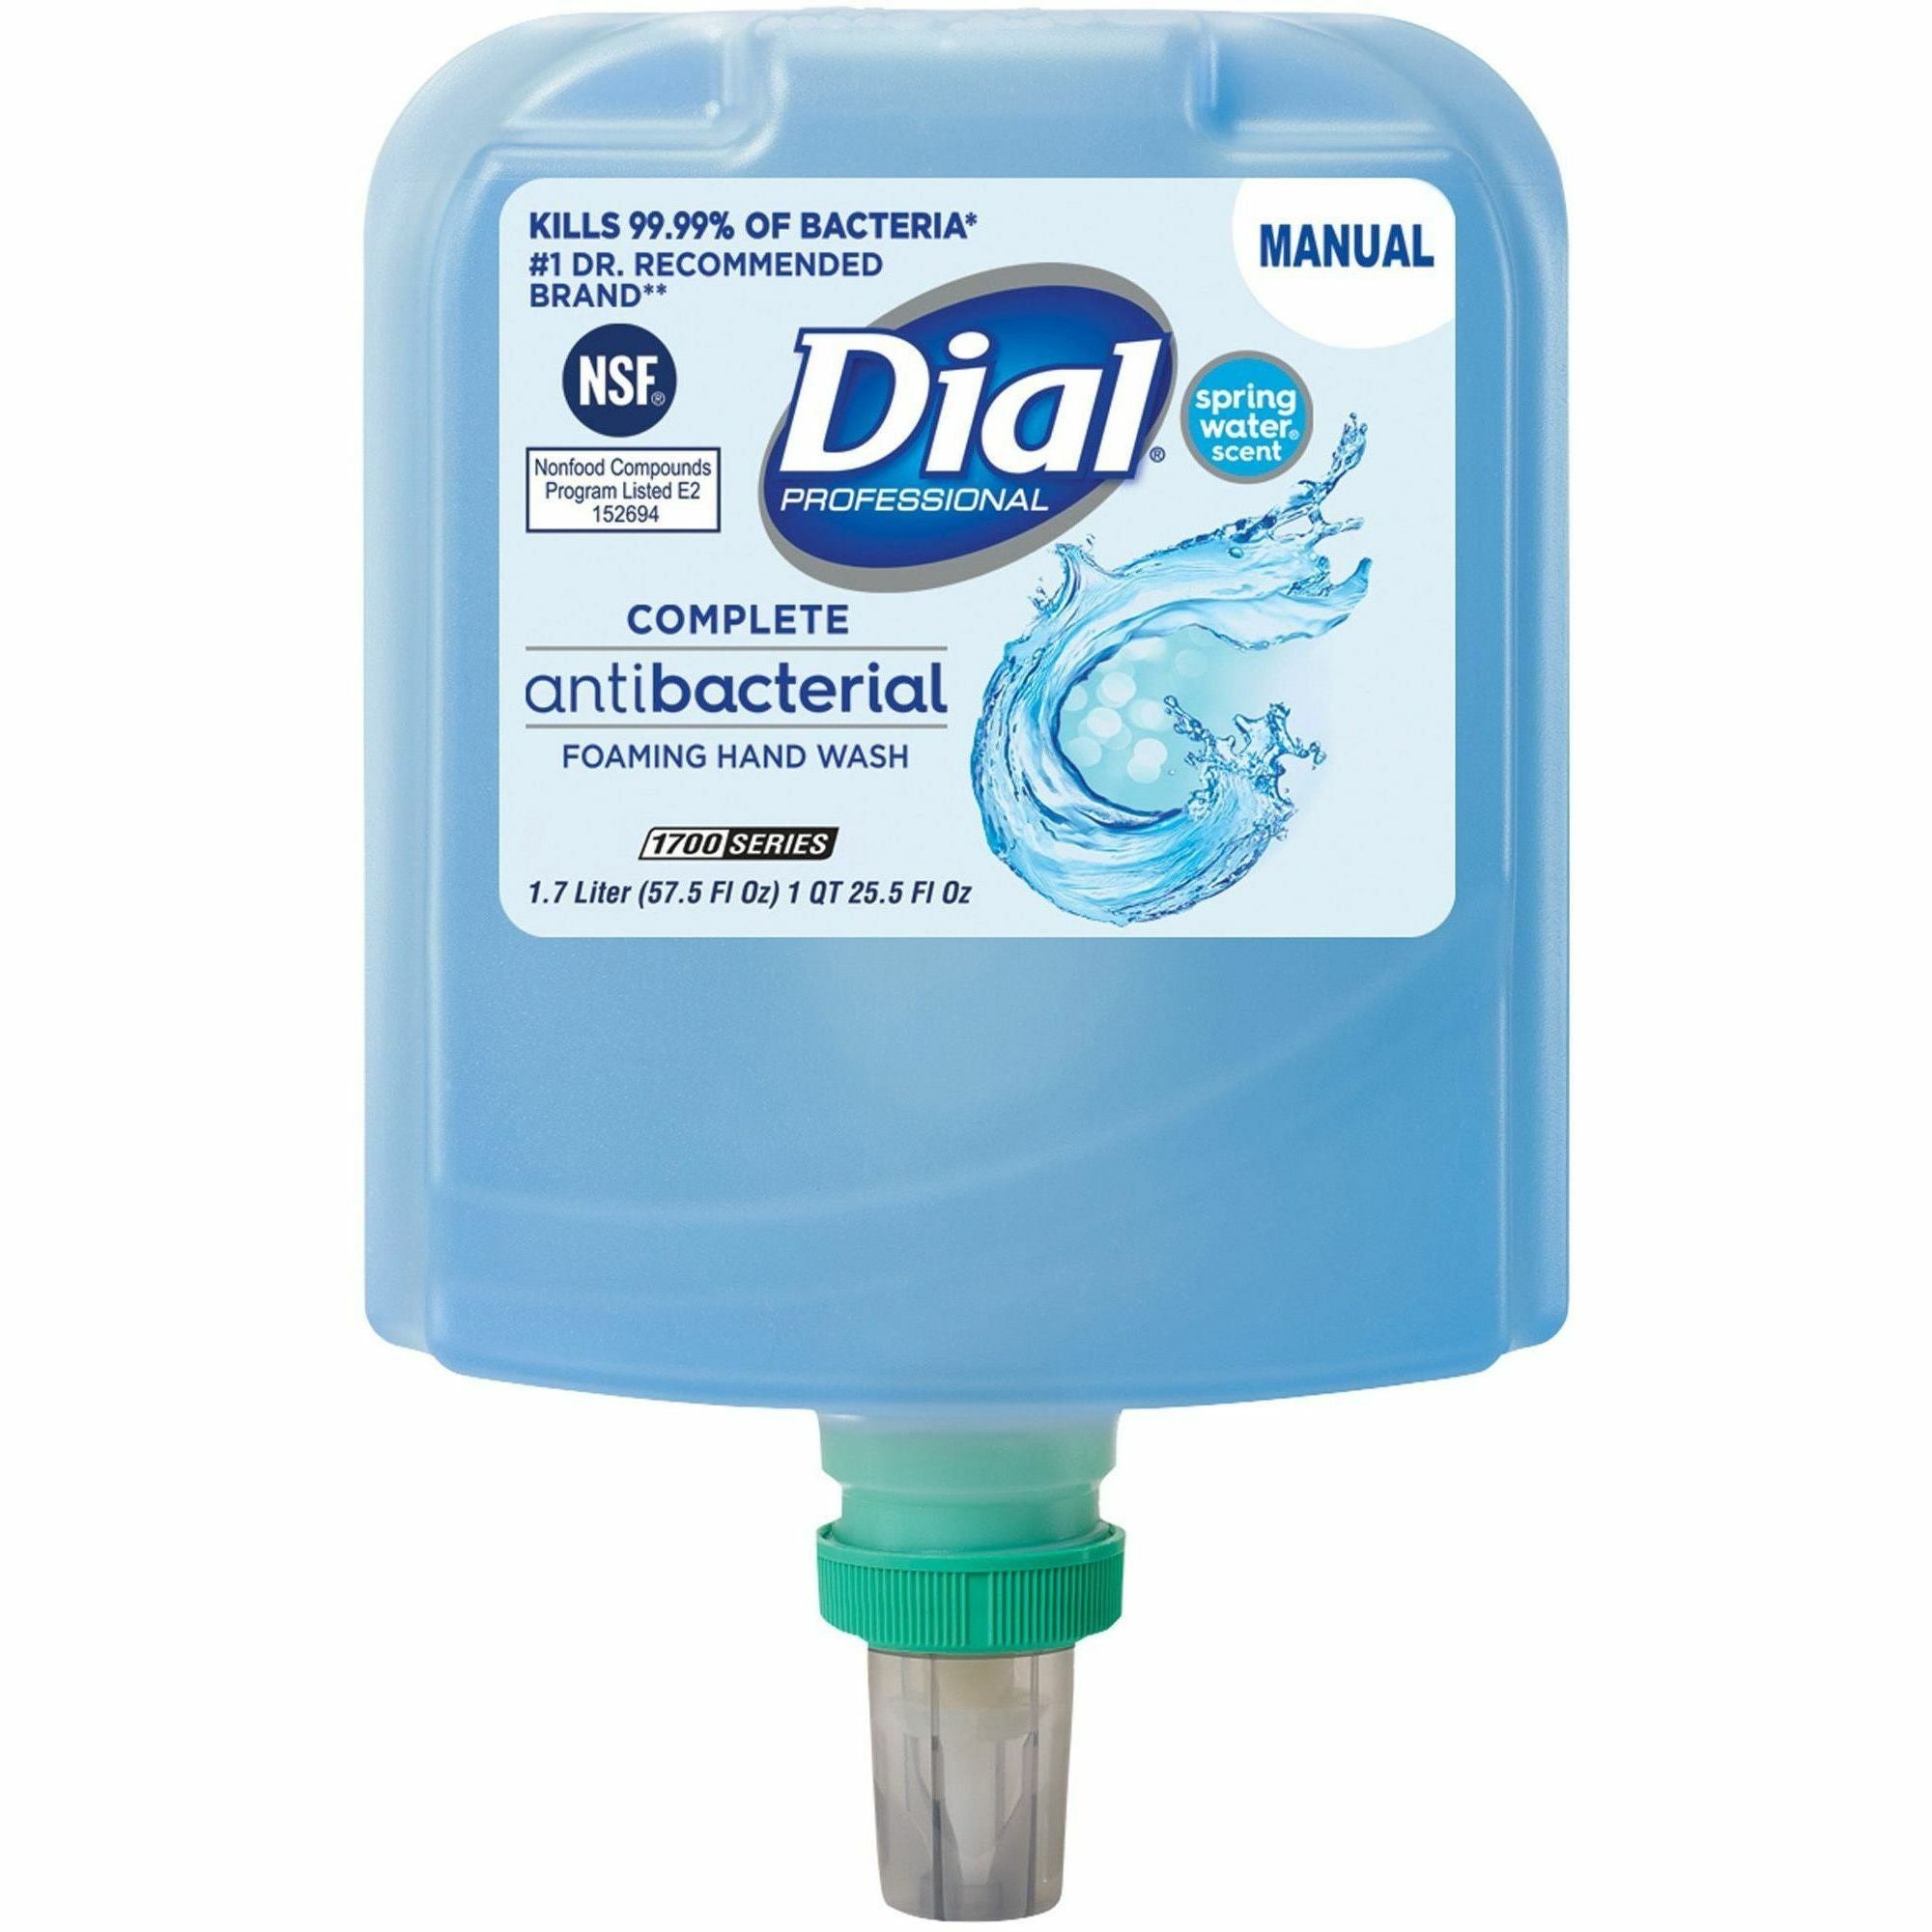 henkel-antibacterial-foaming-hand-wash-spring-water-scentfor-575-fl-oz-1700-ml-hand-moisturizing-antibacterial-blue-1-each_dia19693 - 1